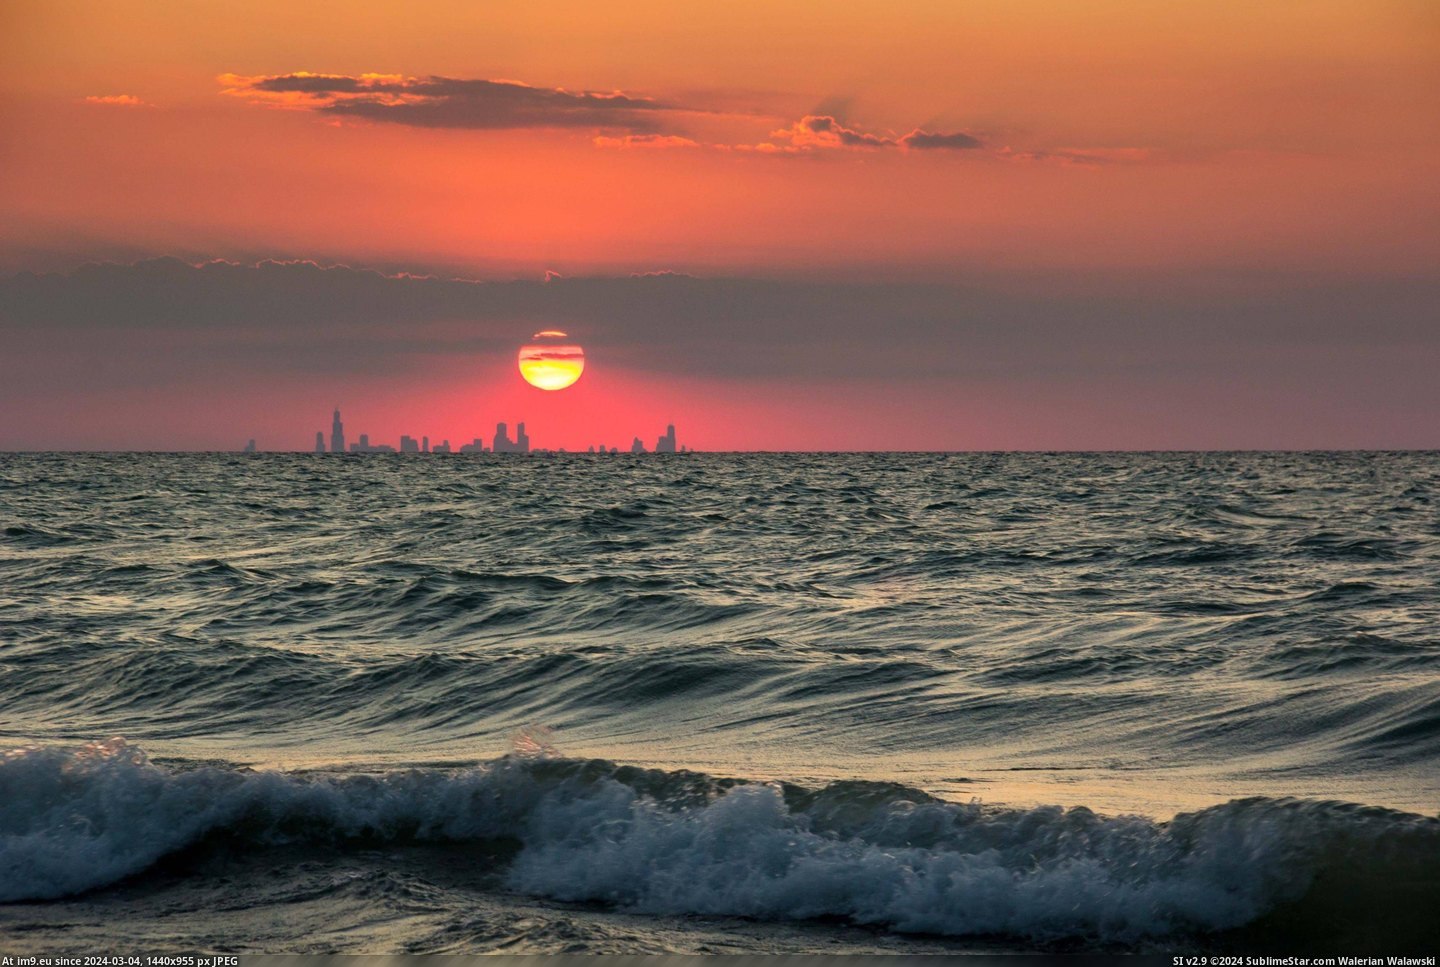 #Lake #Chicago #Skyline #Michigan [Pics] Chicago skyline from across Lake Michigan. Pic. (Bild von album My r/PICS favs))